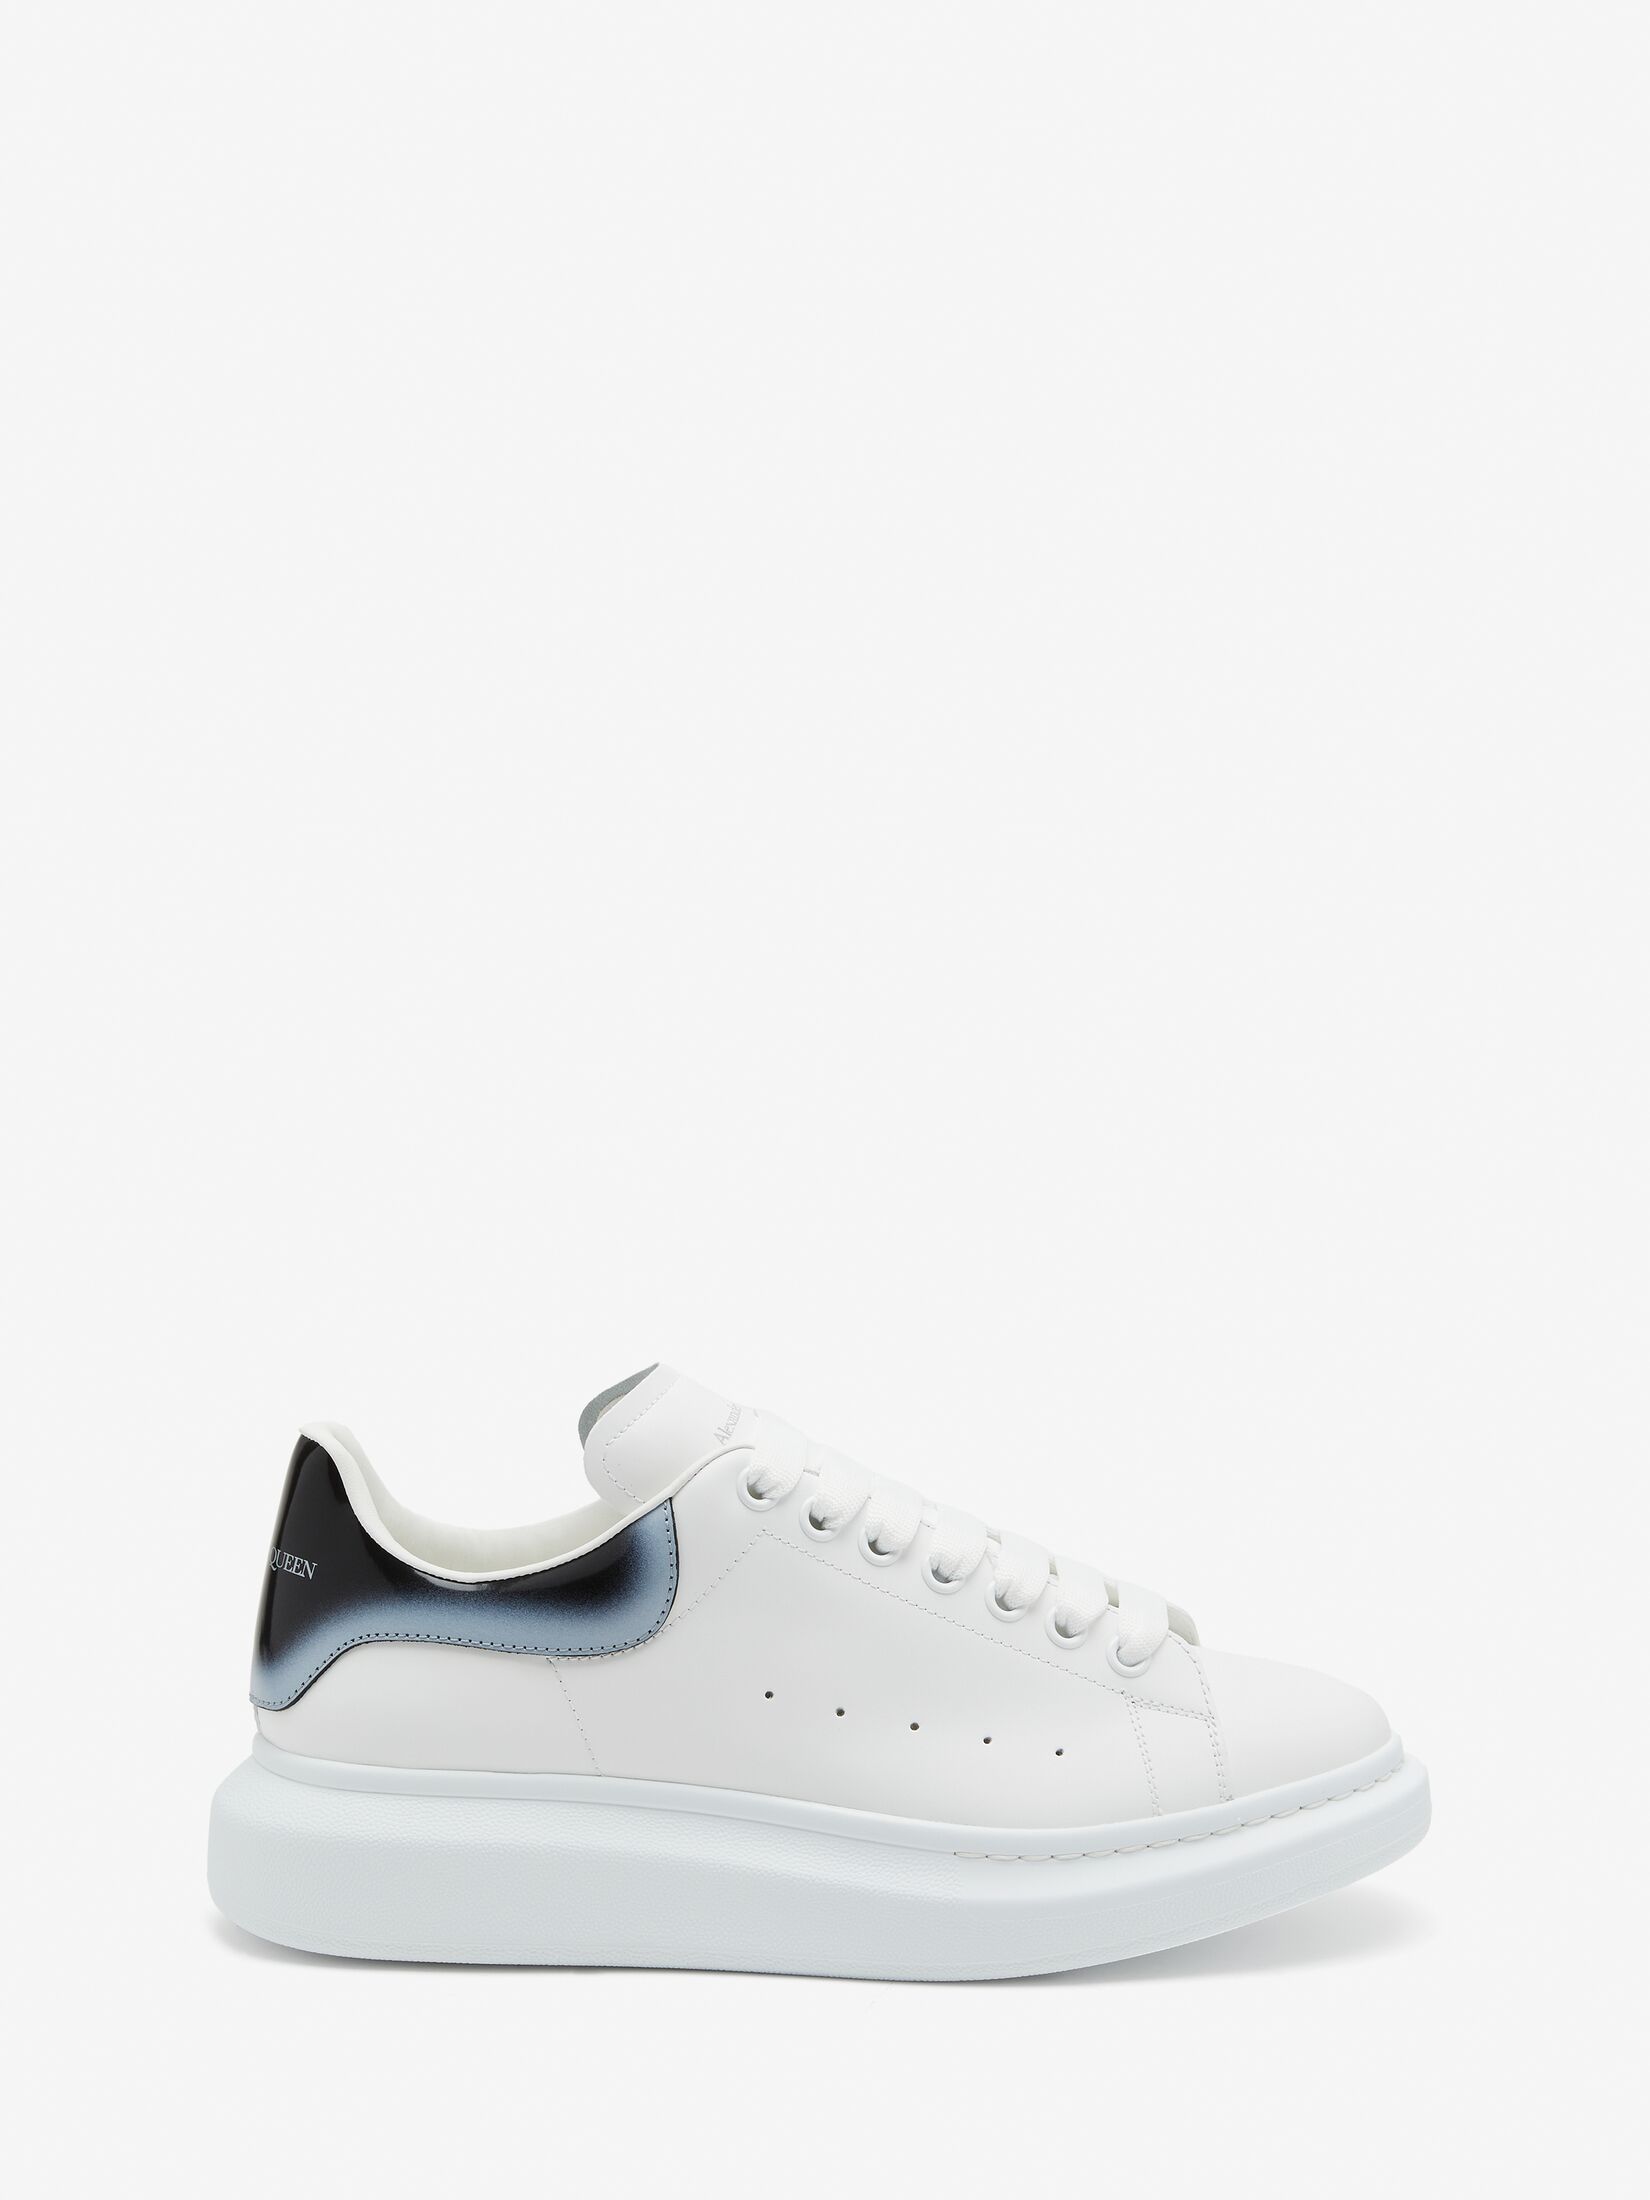 Oversized Sneaker in White/Black | Alexander McQueen GB